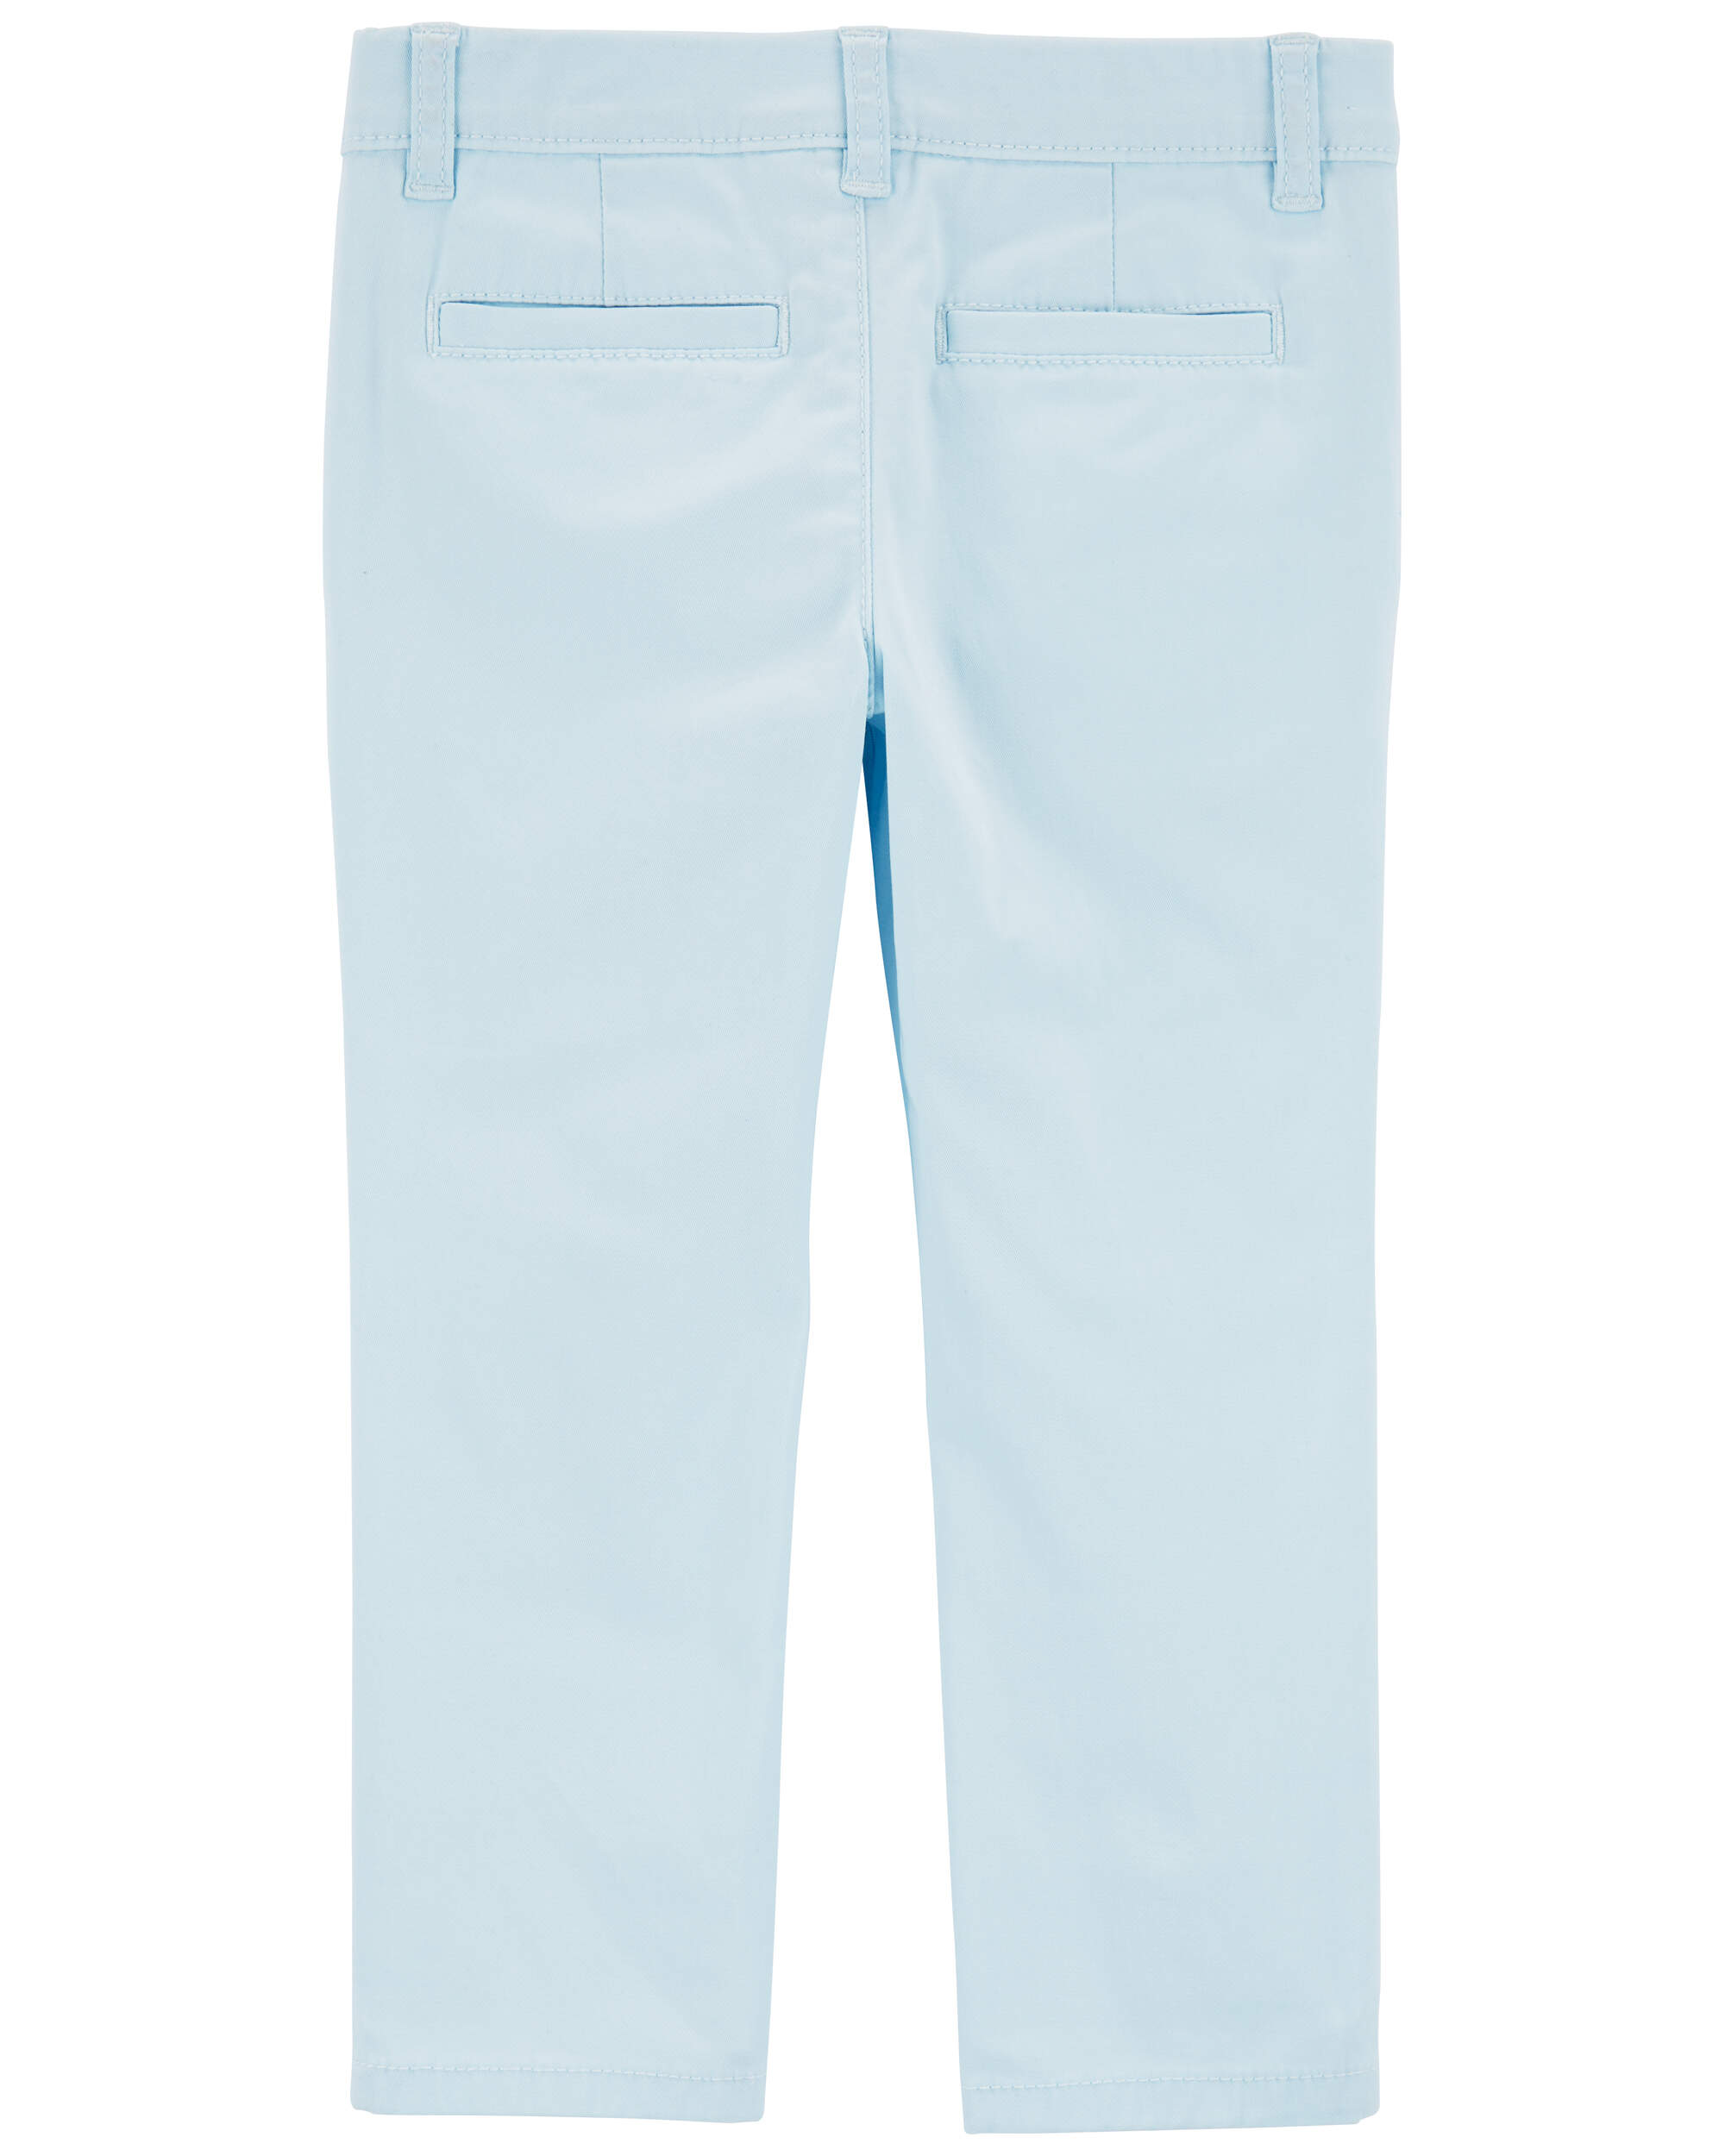 Blue Flat-Front Pants | Carter's Oshkosh Canada